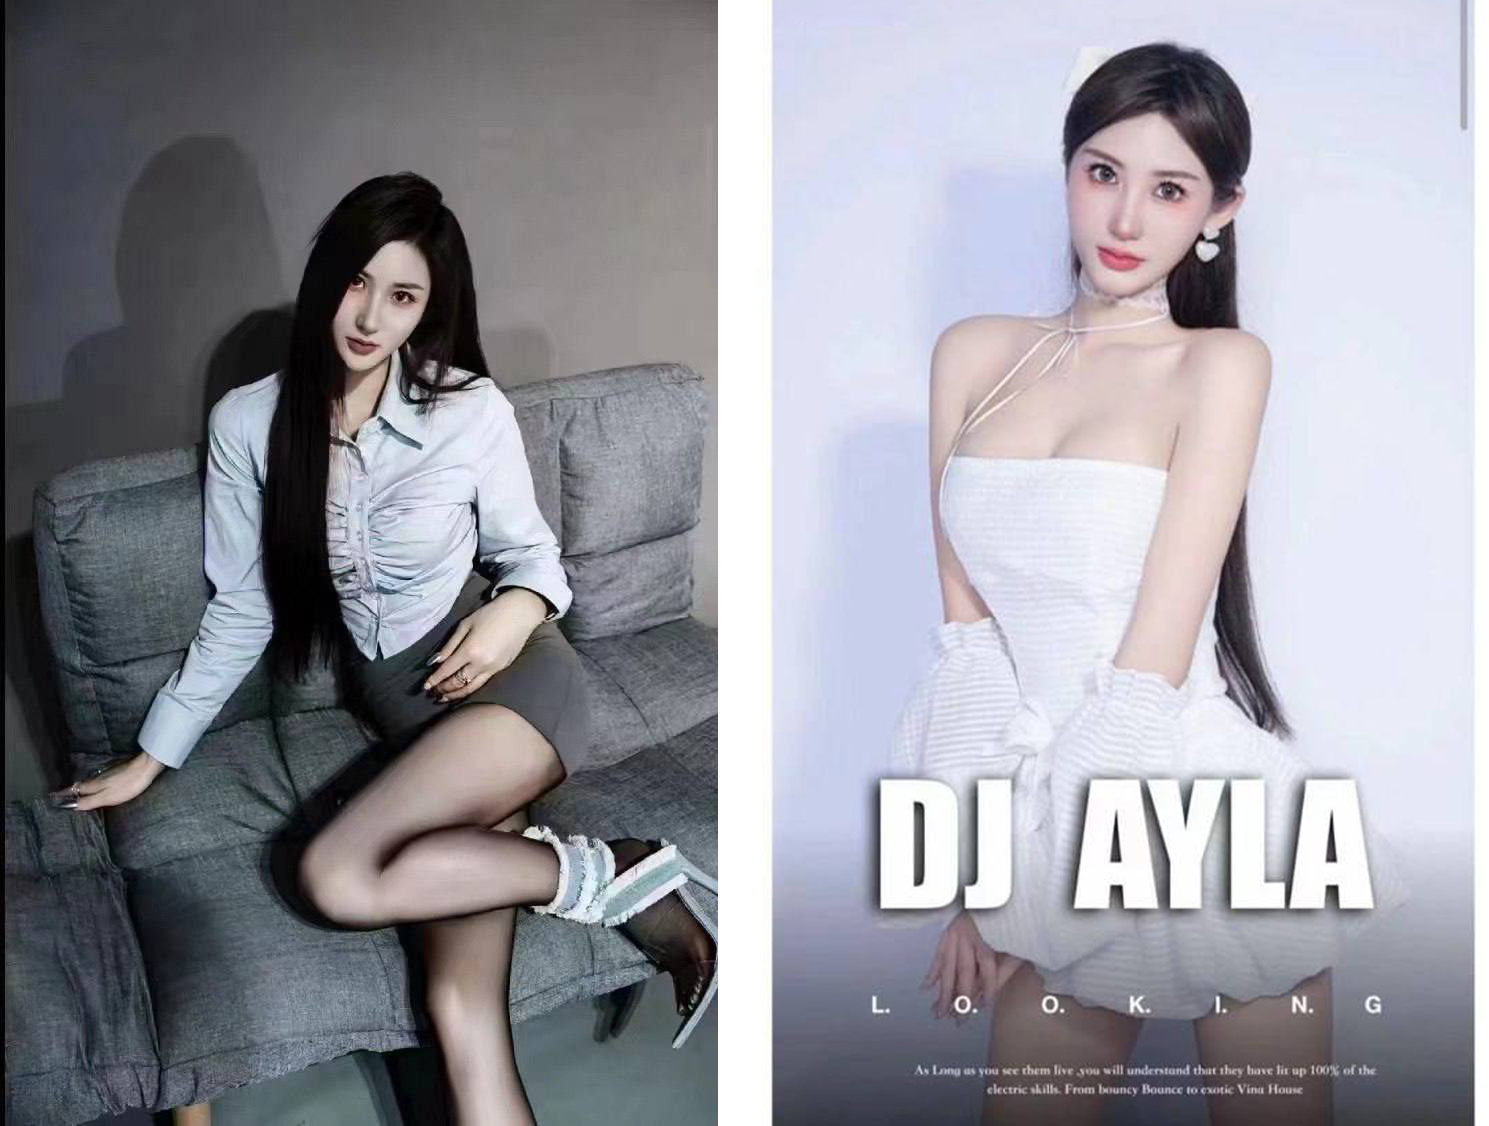 Guangdong nightclubs - female DJs were filmed playing music underneath their vacuum skirts.